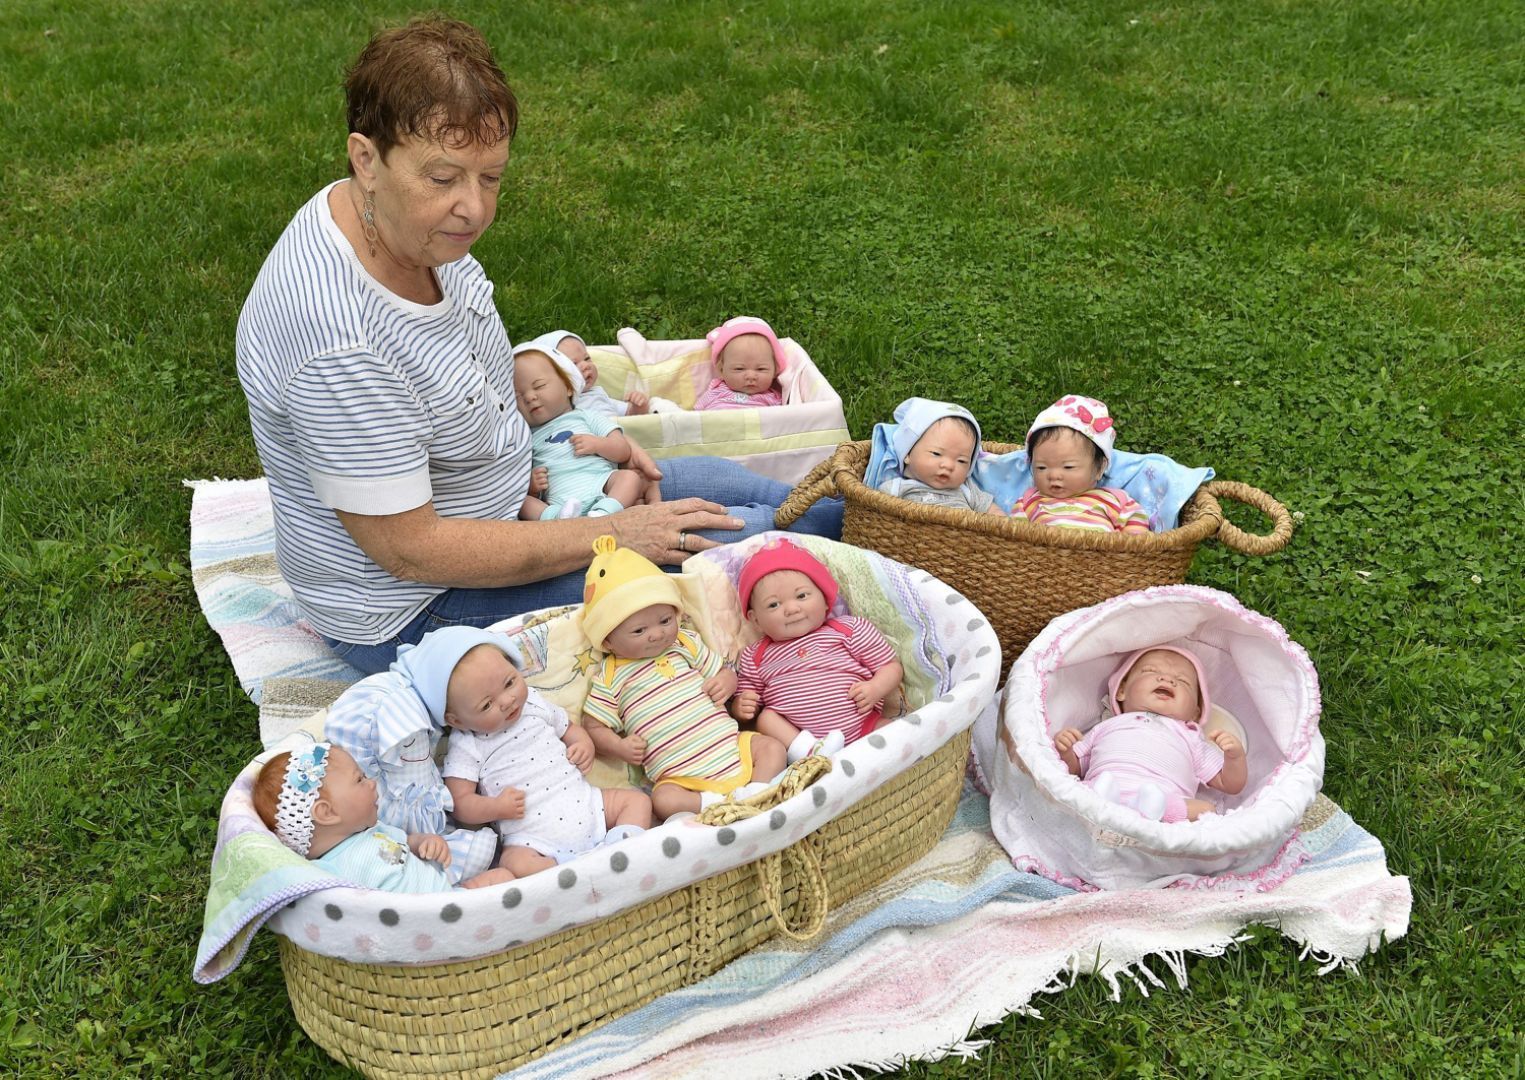 reborn baby dolls for $1